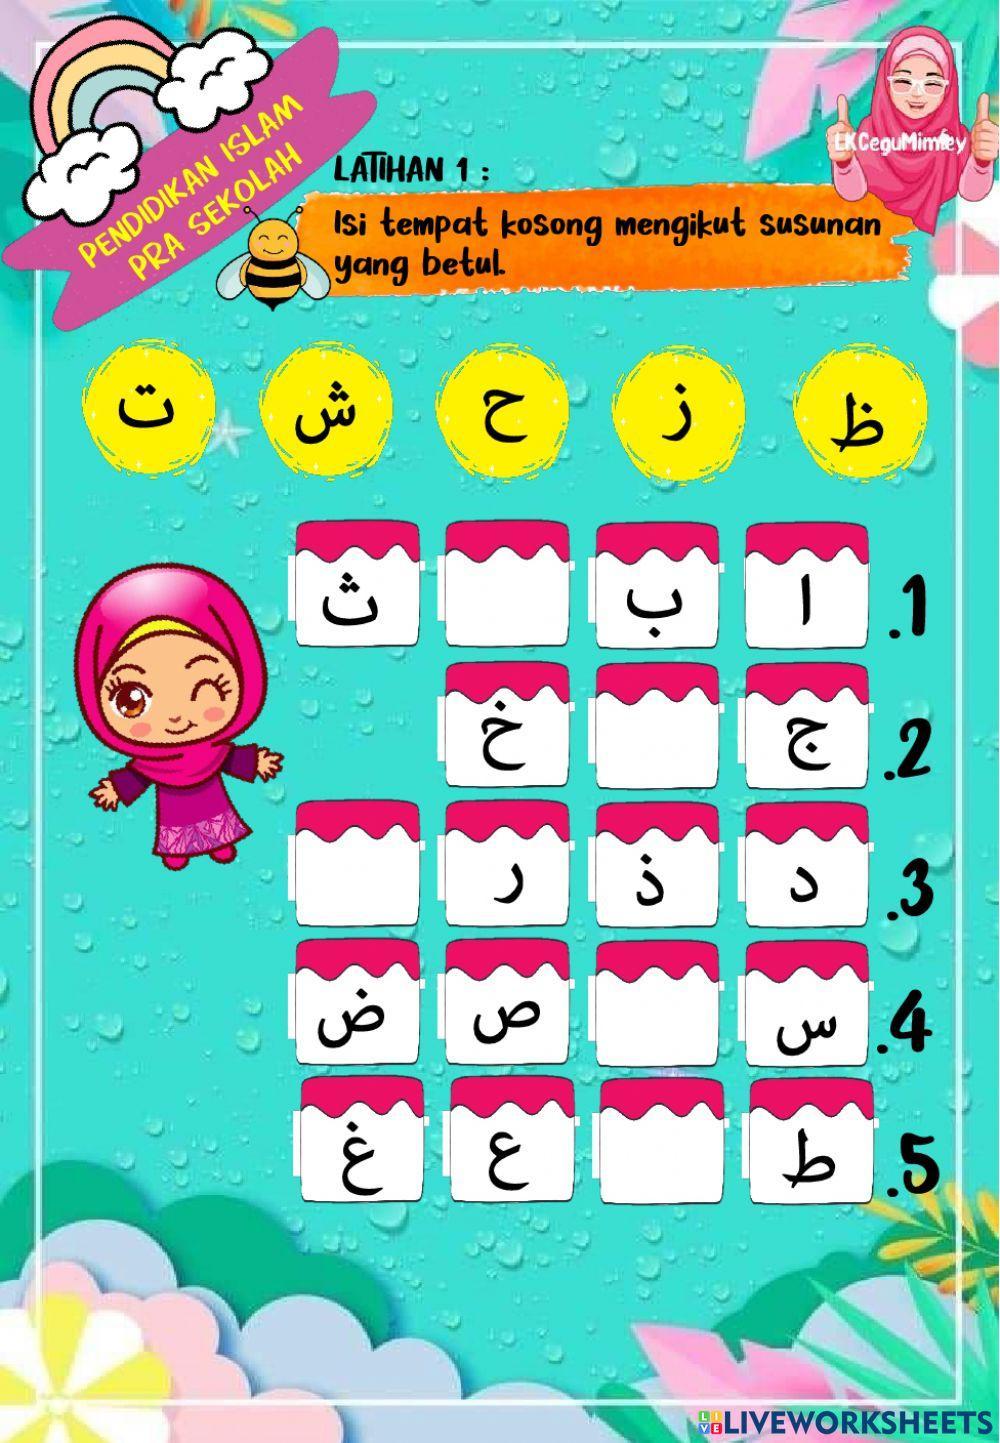 Latihan huruf hijaiyah